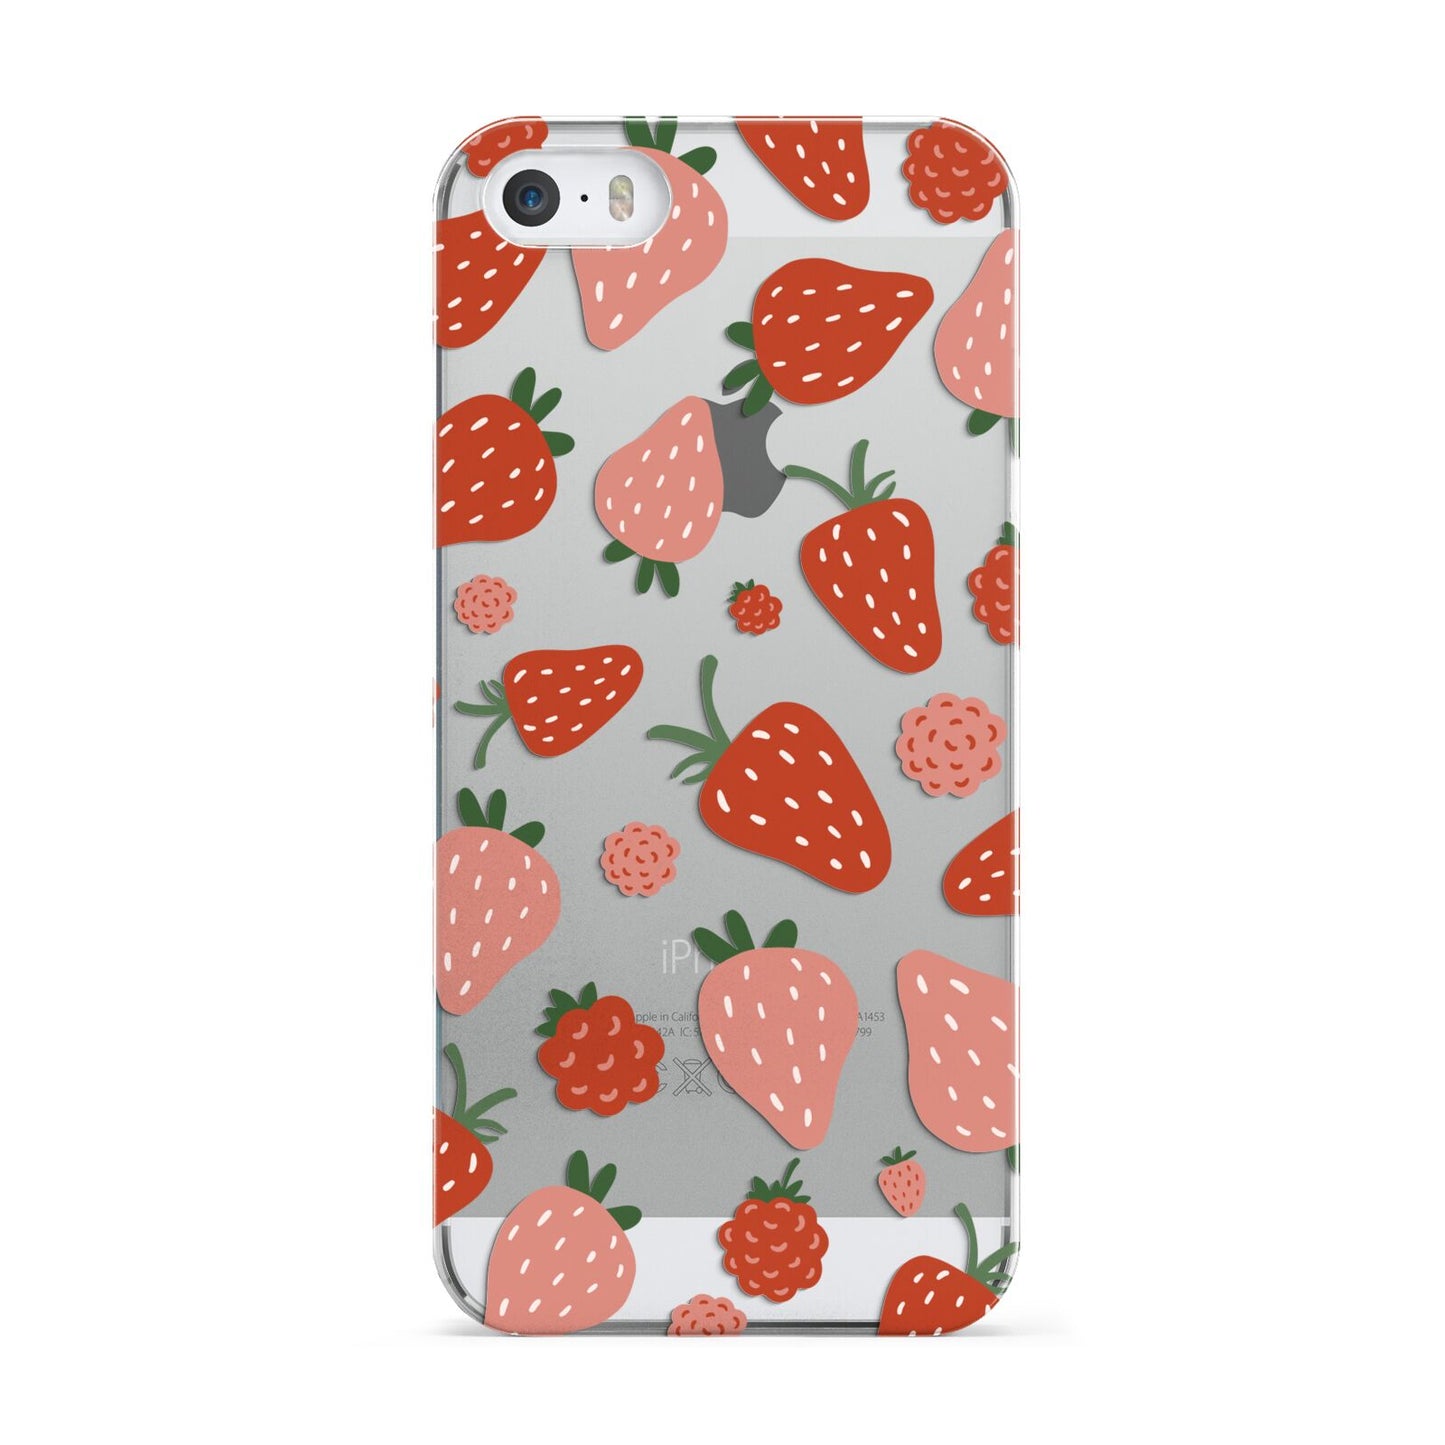 Strawberry Apple iPhone 5 Case